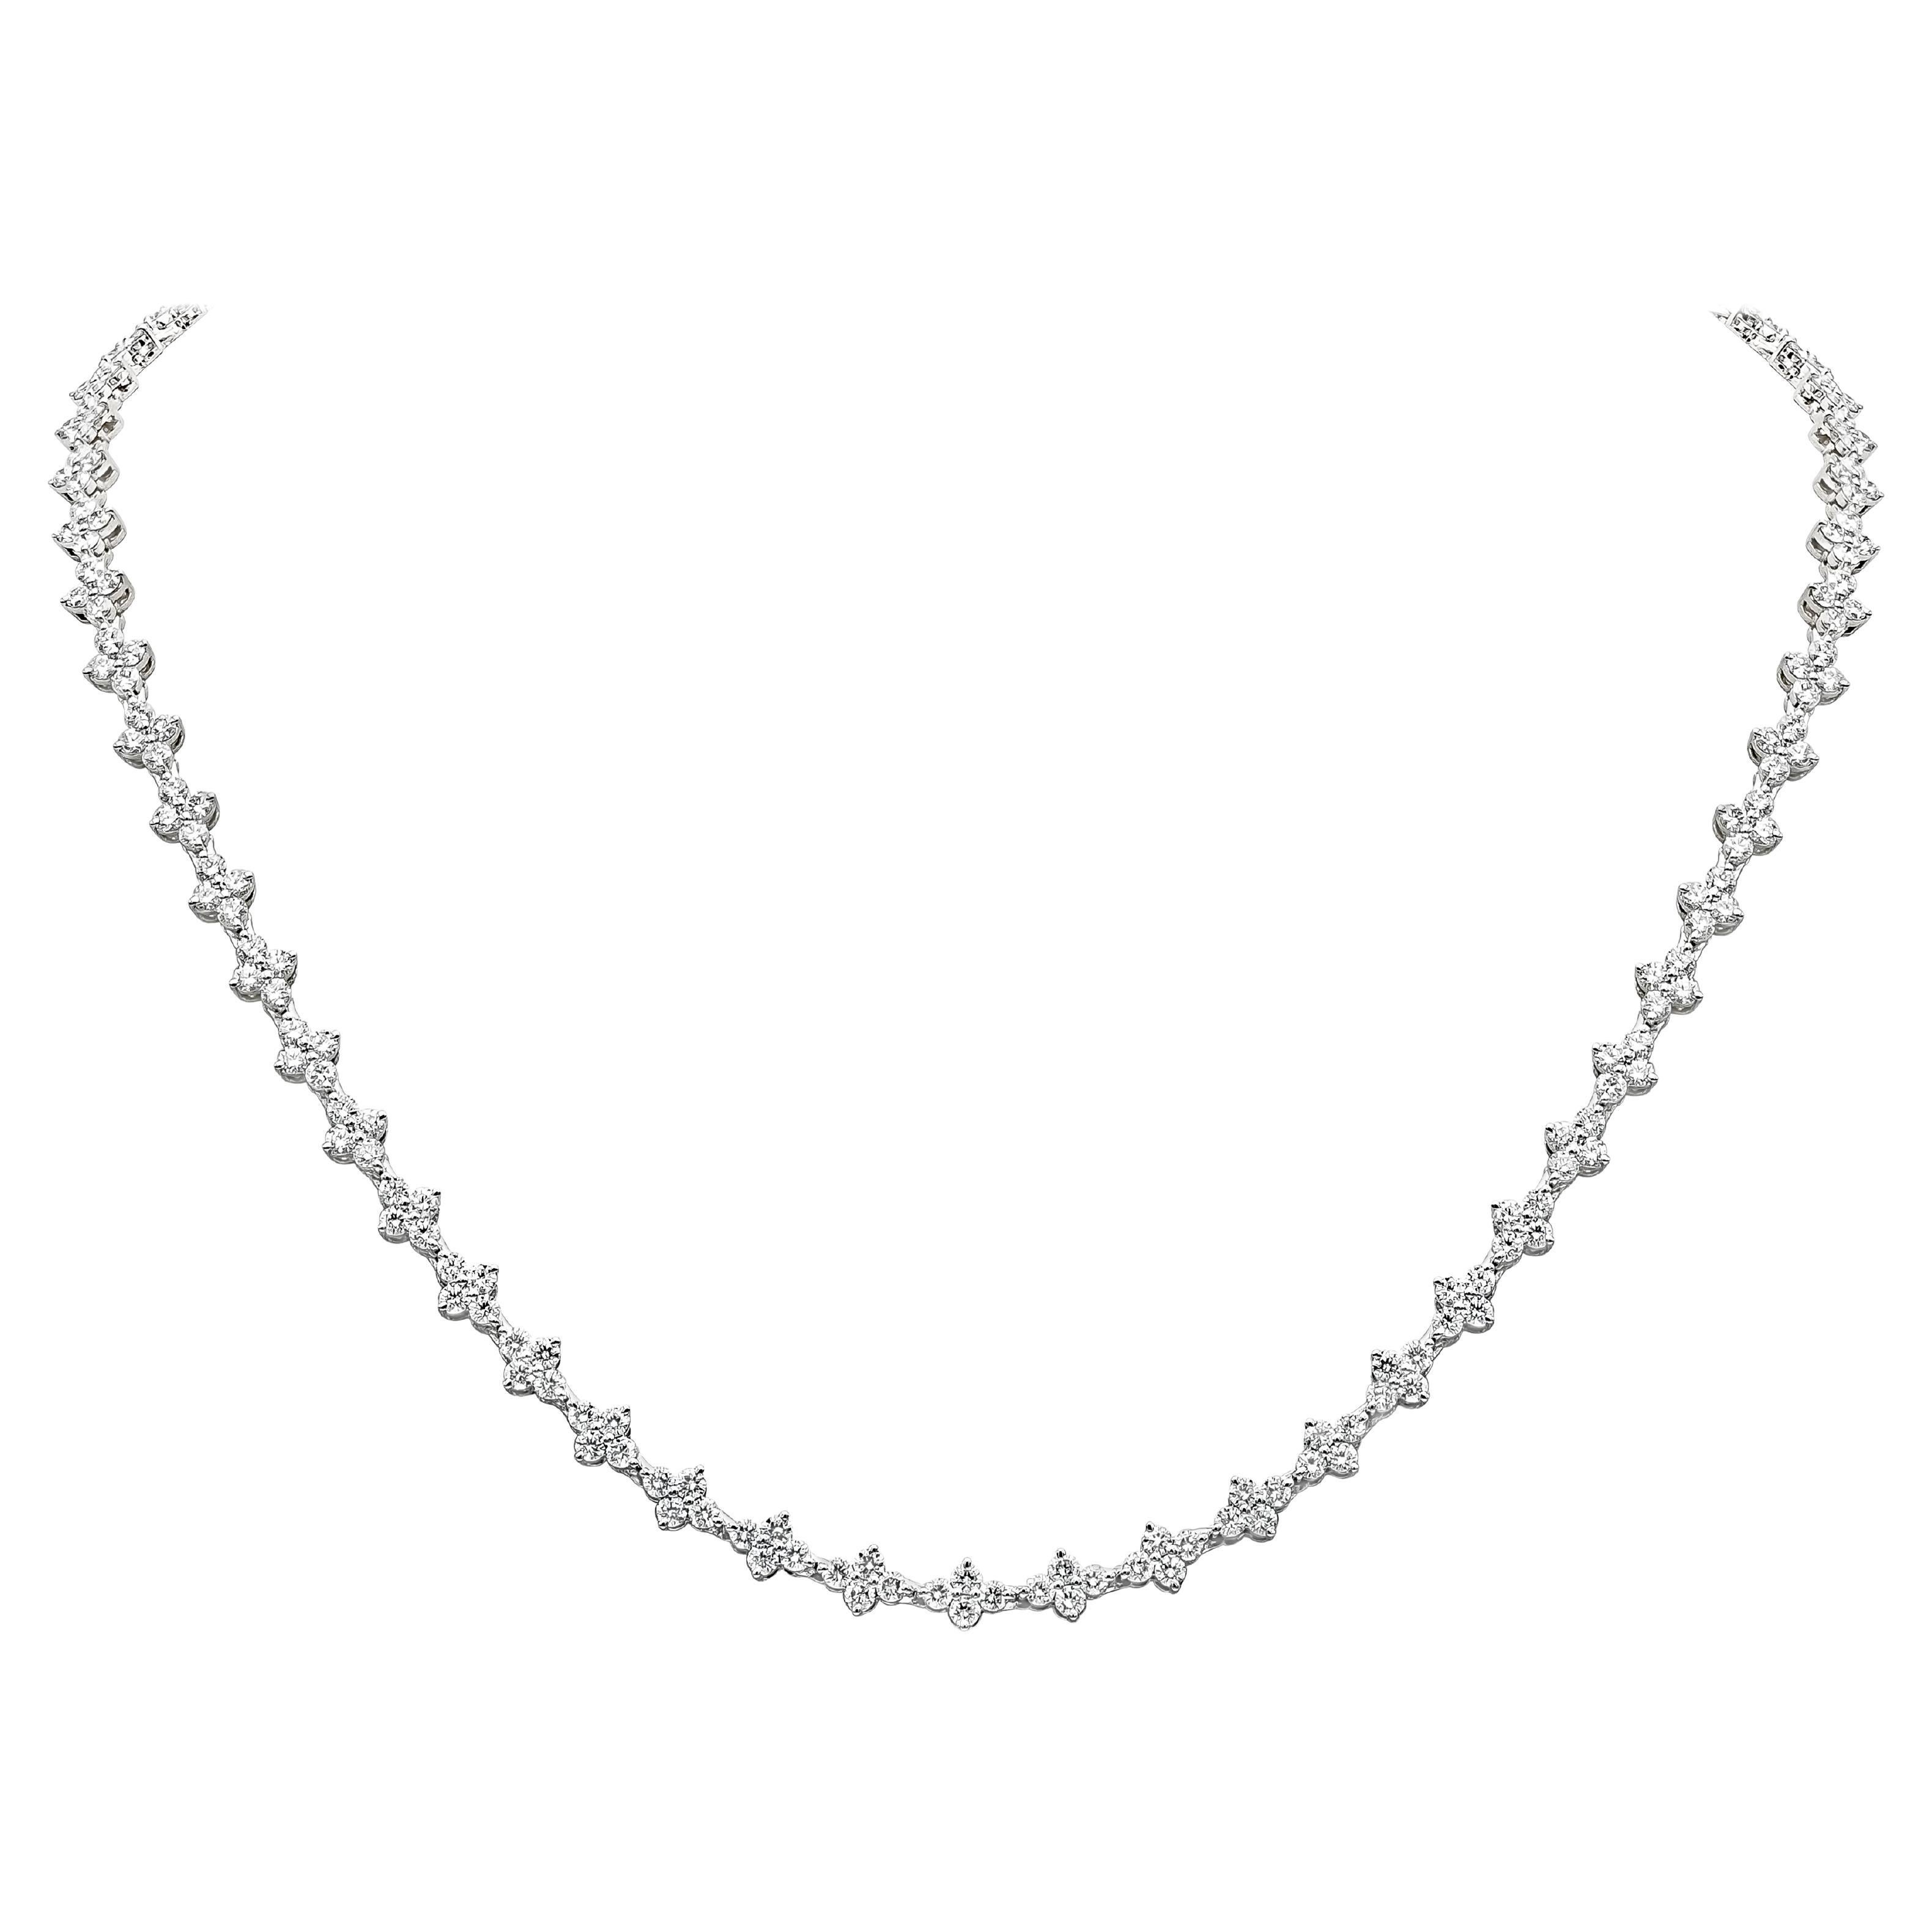 Roman Malakov 10.99 Carat Total Diamond Tennis Necklace in White Gold